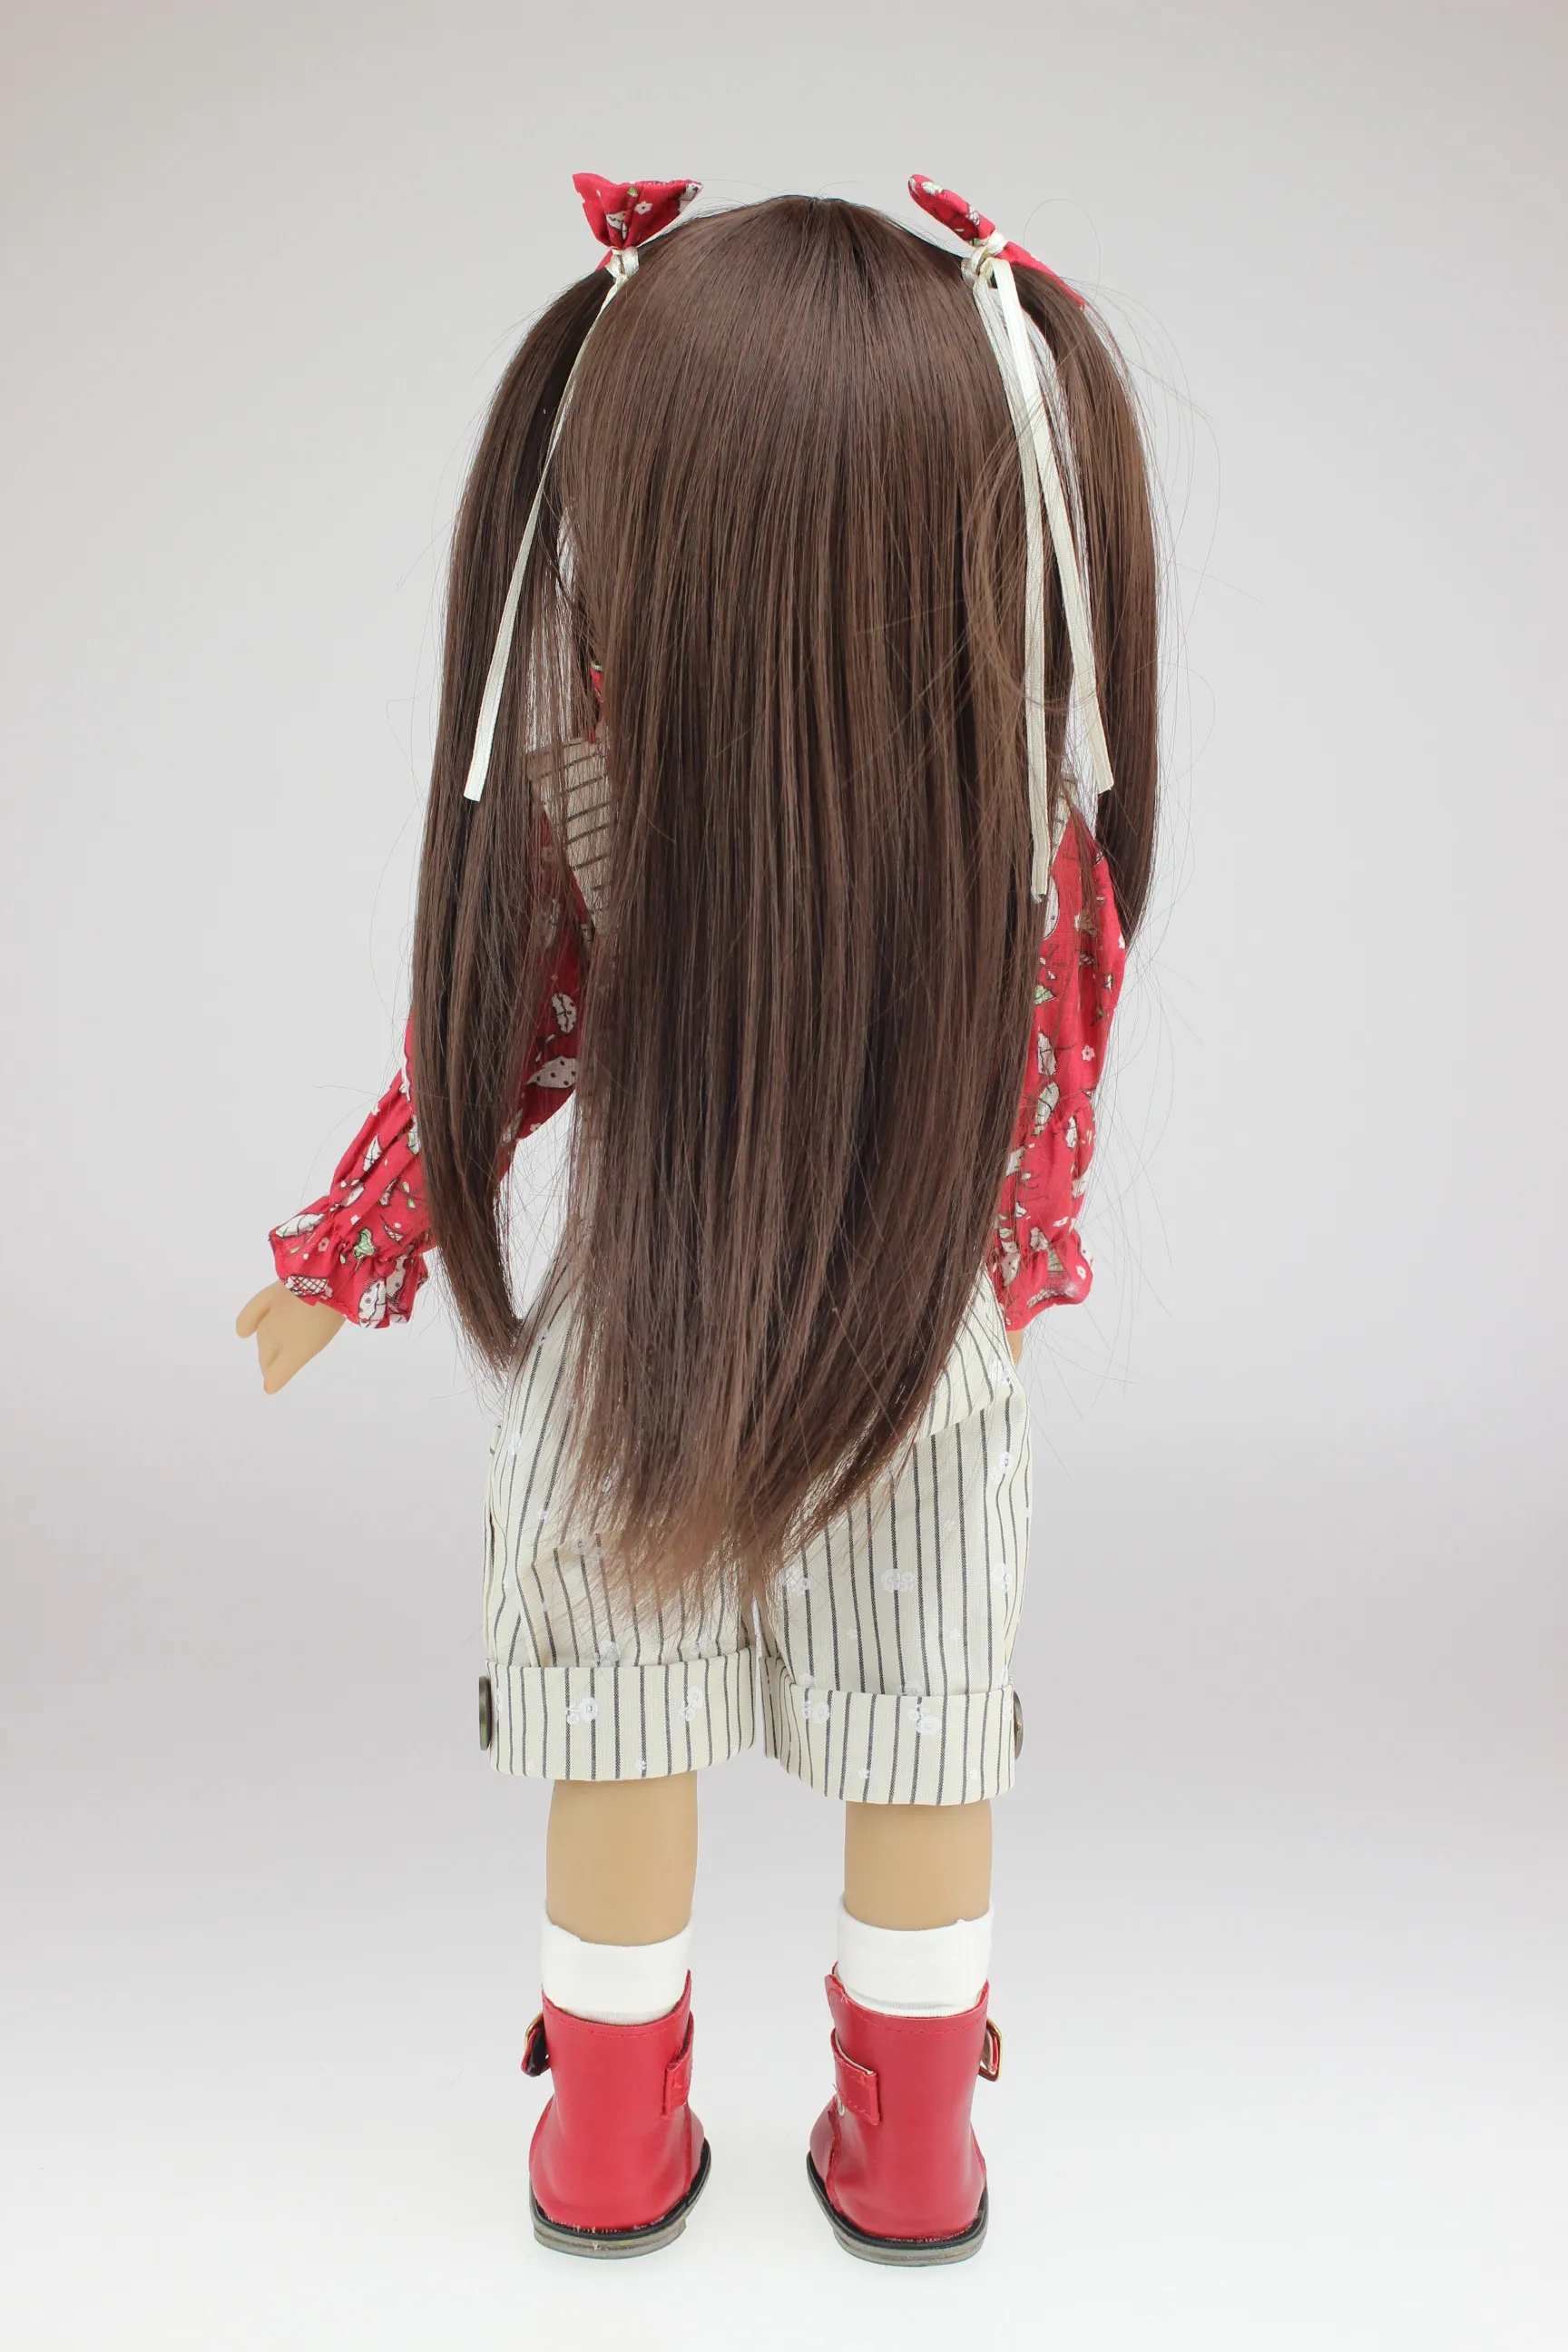 18 INCH Doll Realistic American Girl Full Vinyl Reborn Dolls As Christmas Birthday Gifts